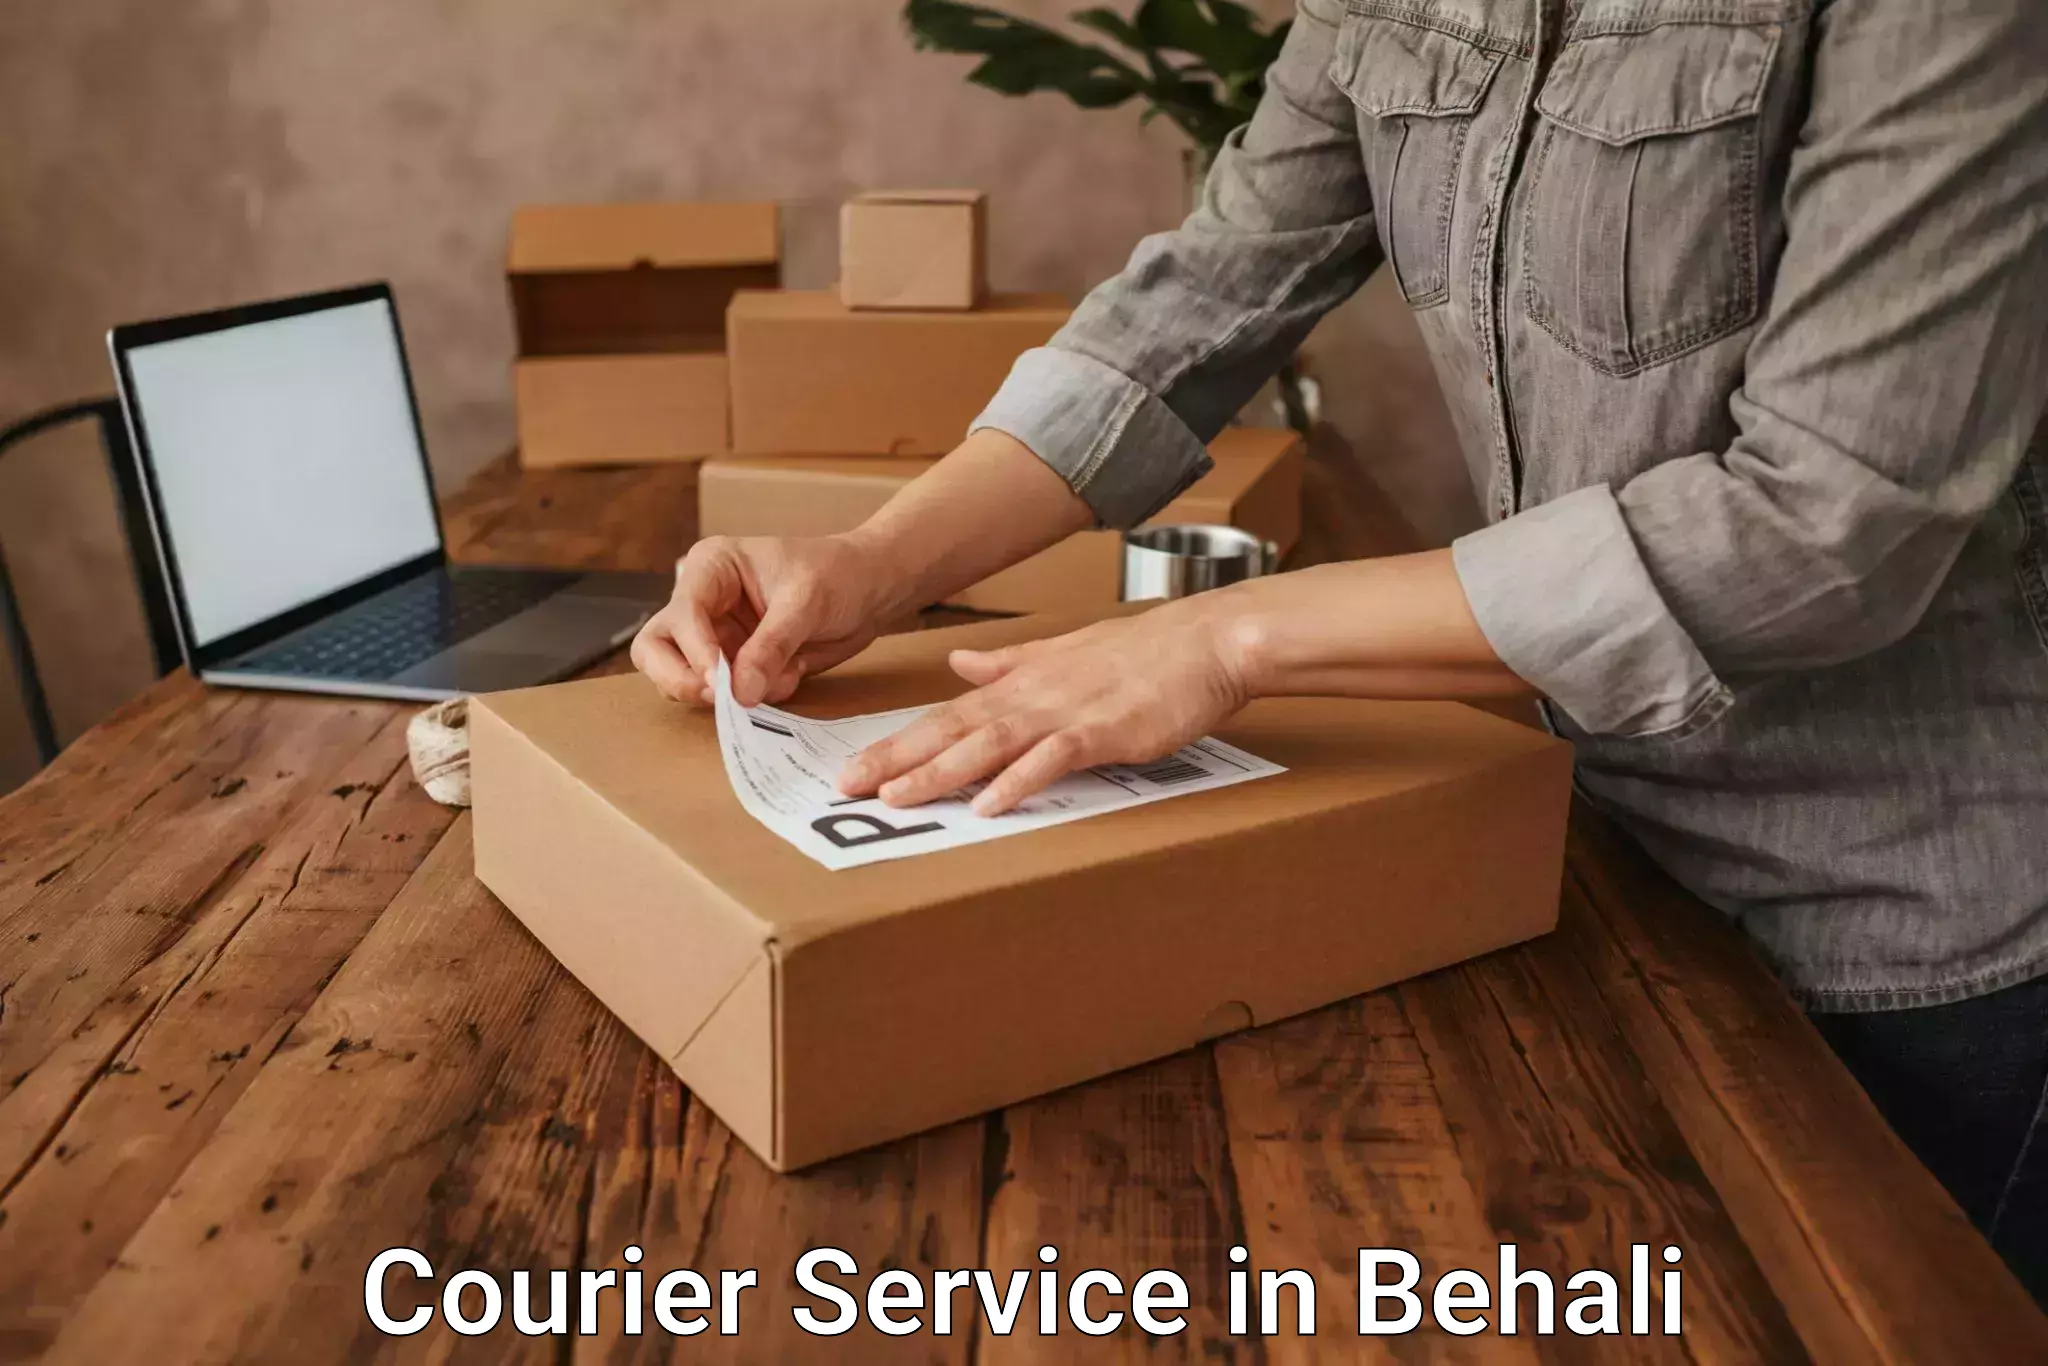 Flexible delivery scheduling in Behali